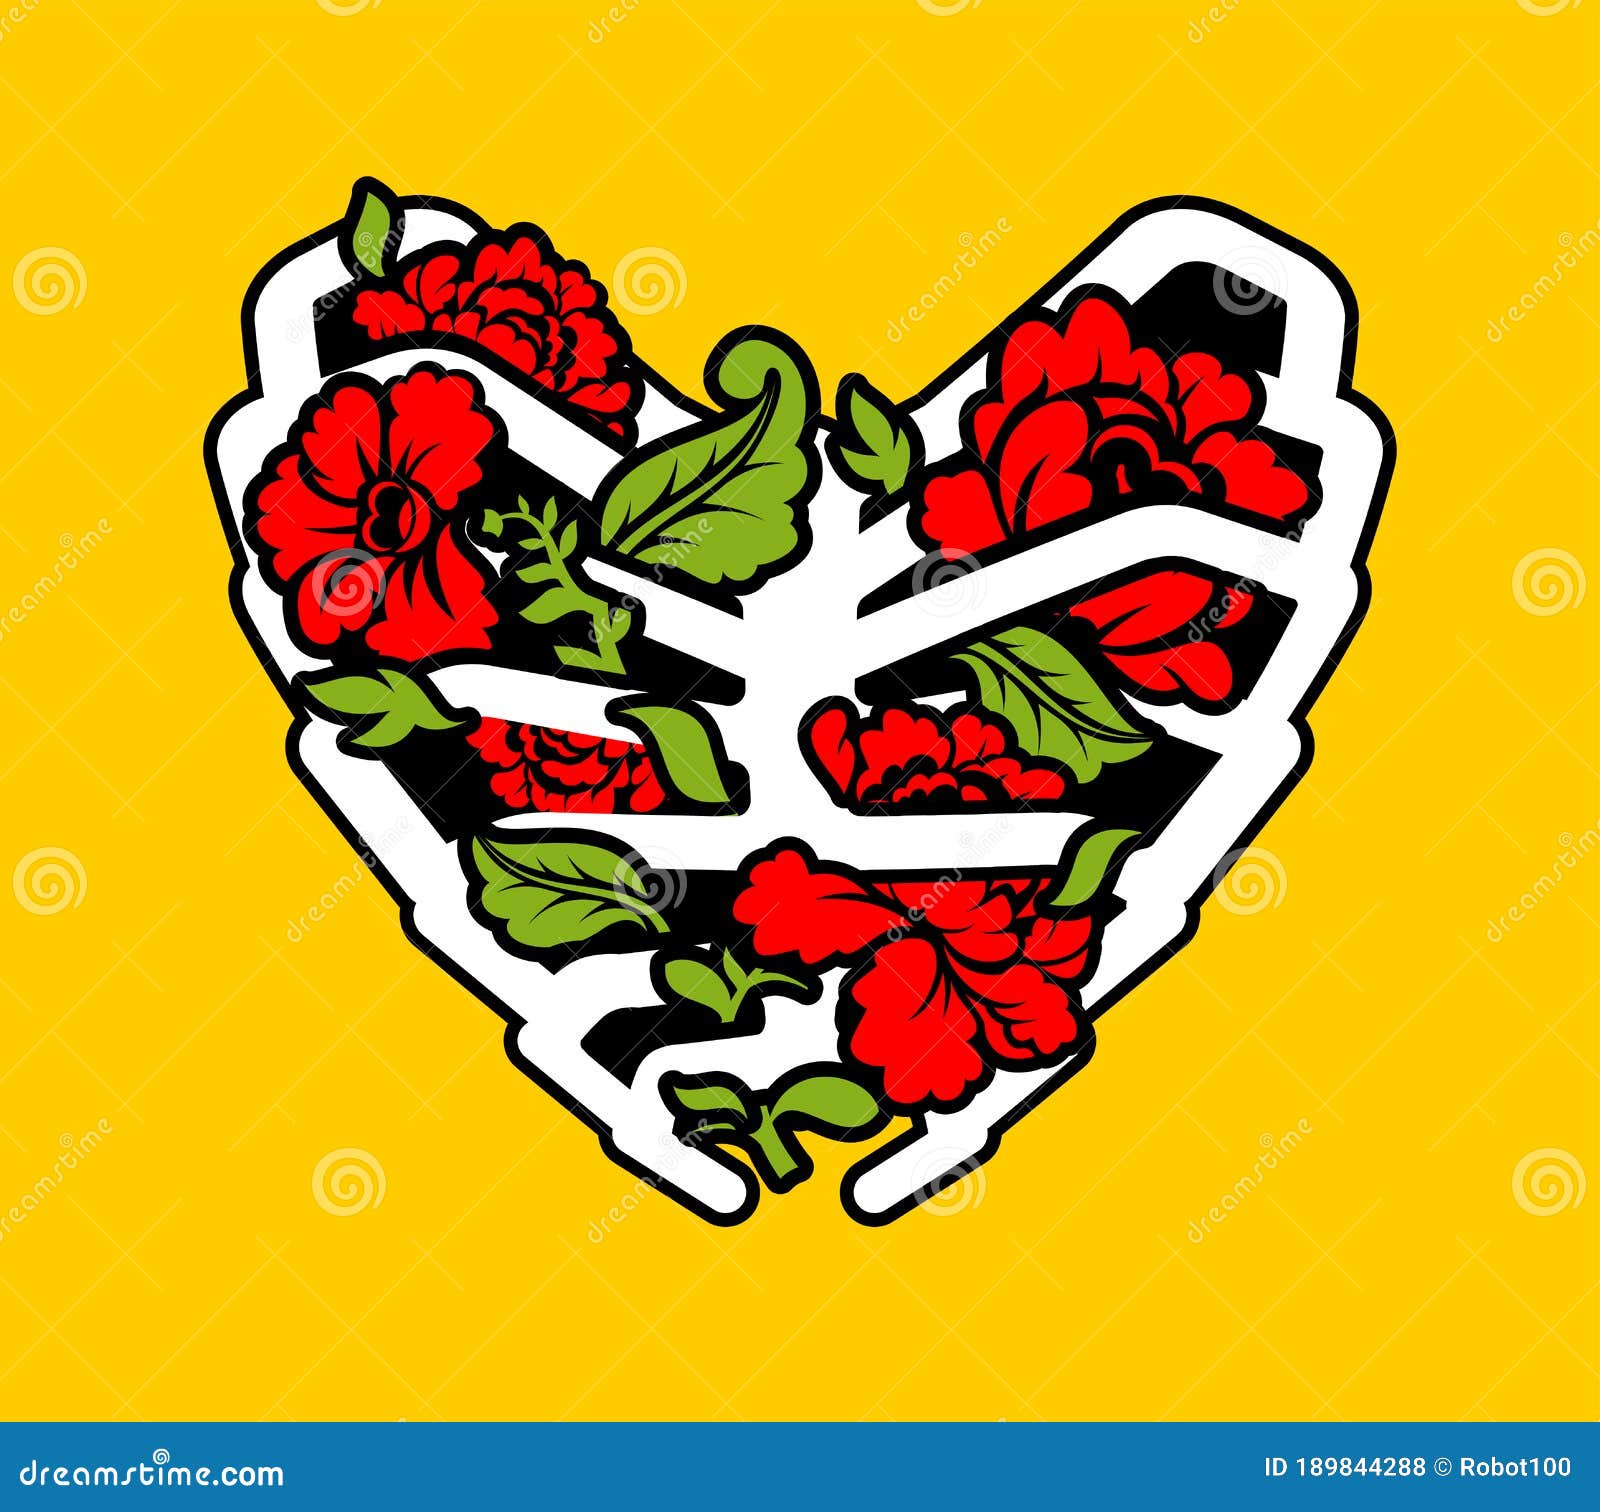 Heart Tattoo Roses Stock Illustrations 447 Heart Tattoo Roses Stock Illustrations Vectors Clipart Dreamstime